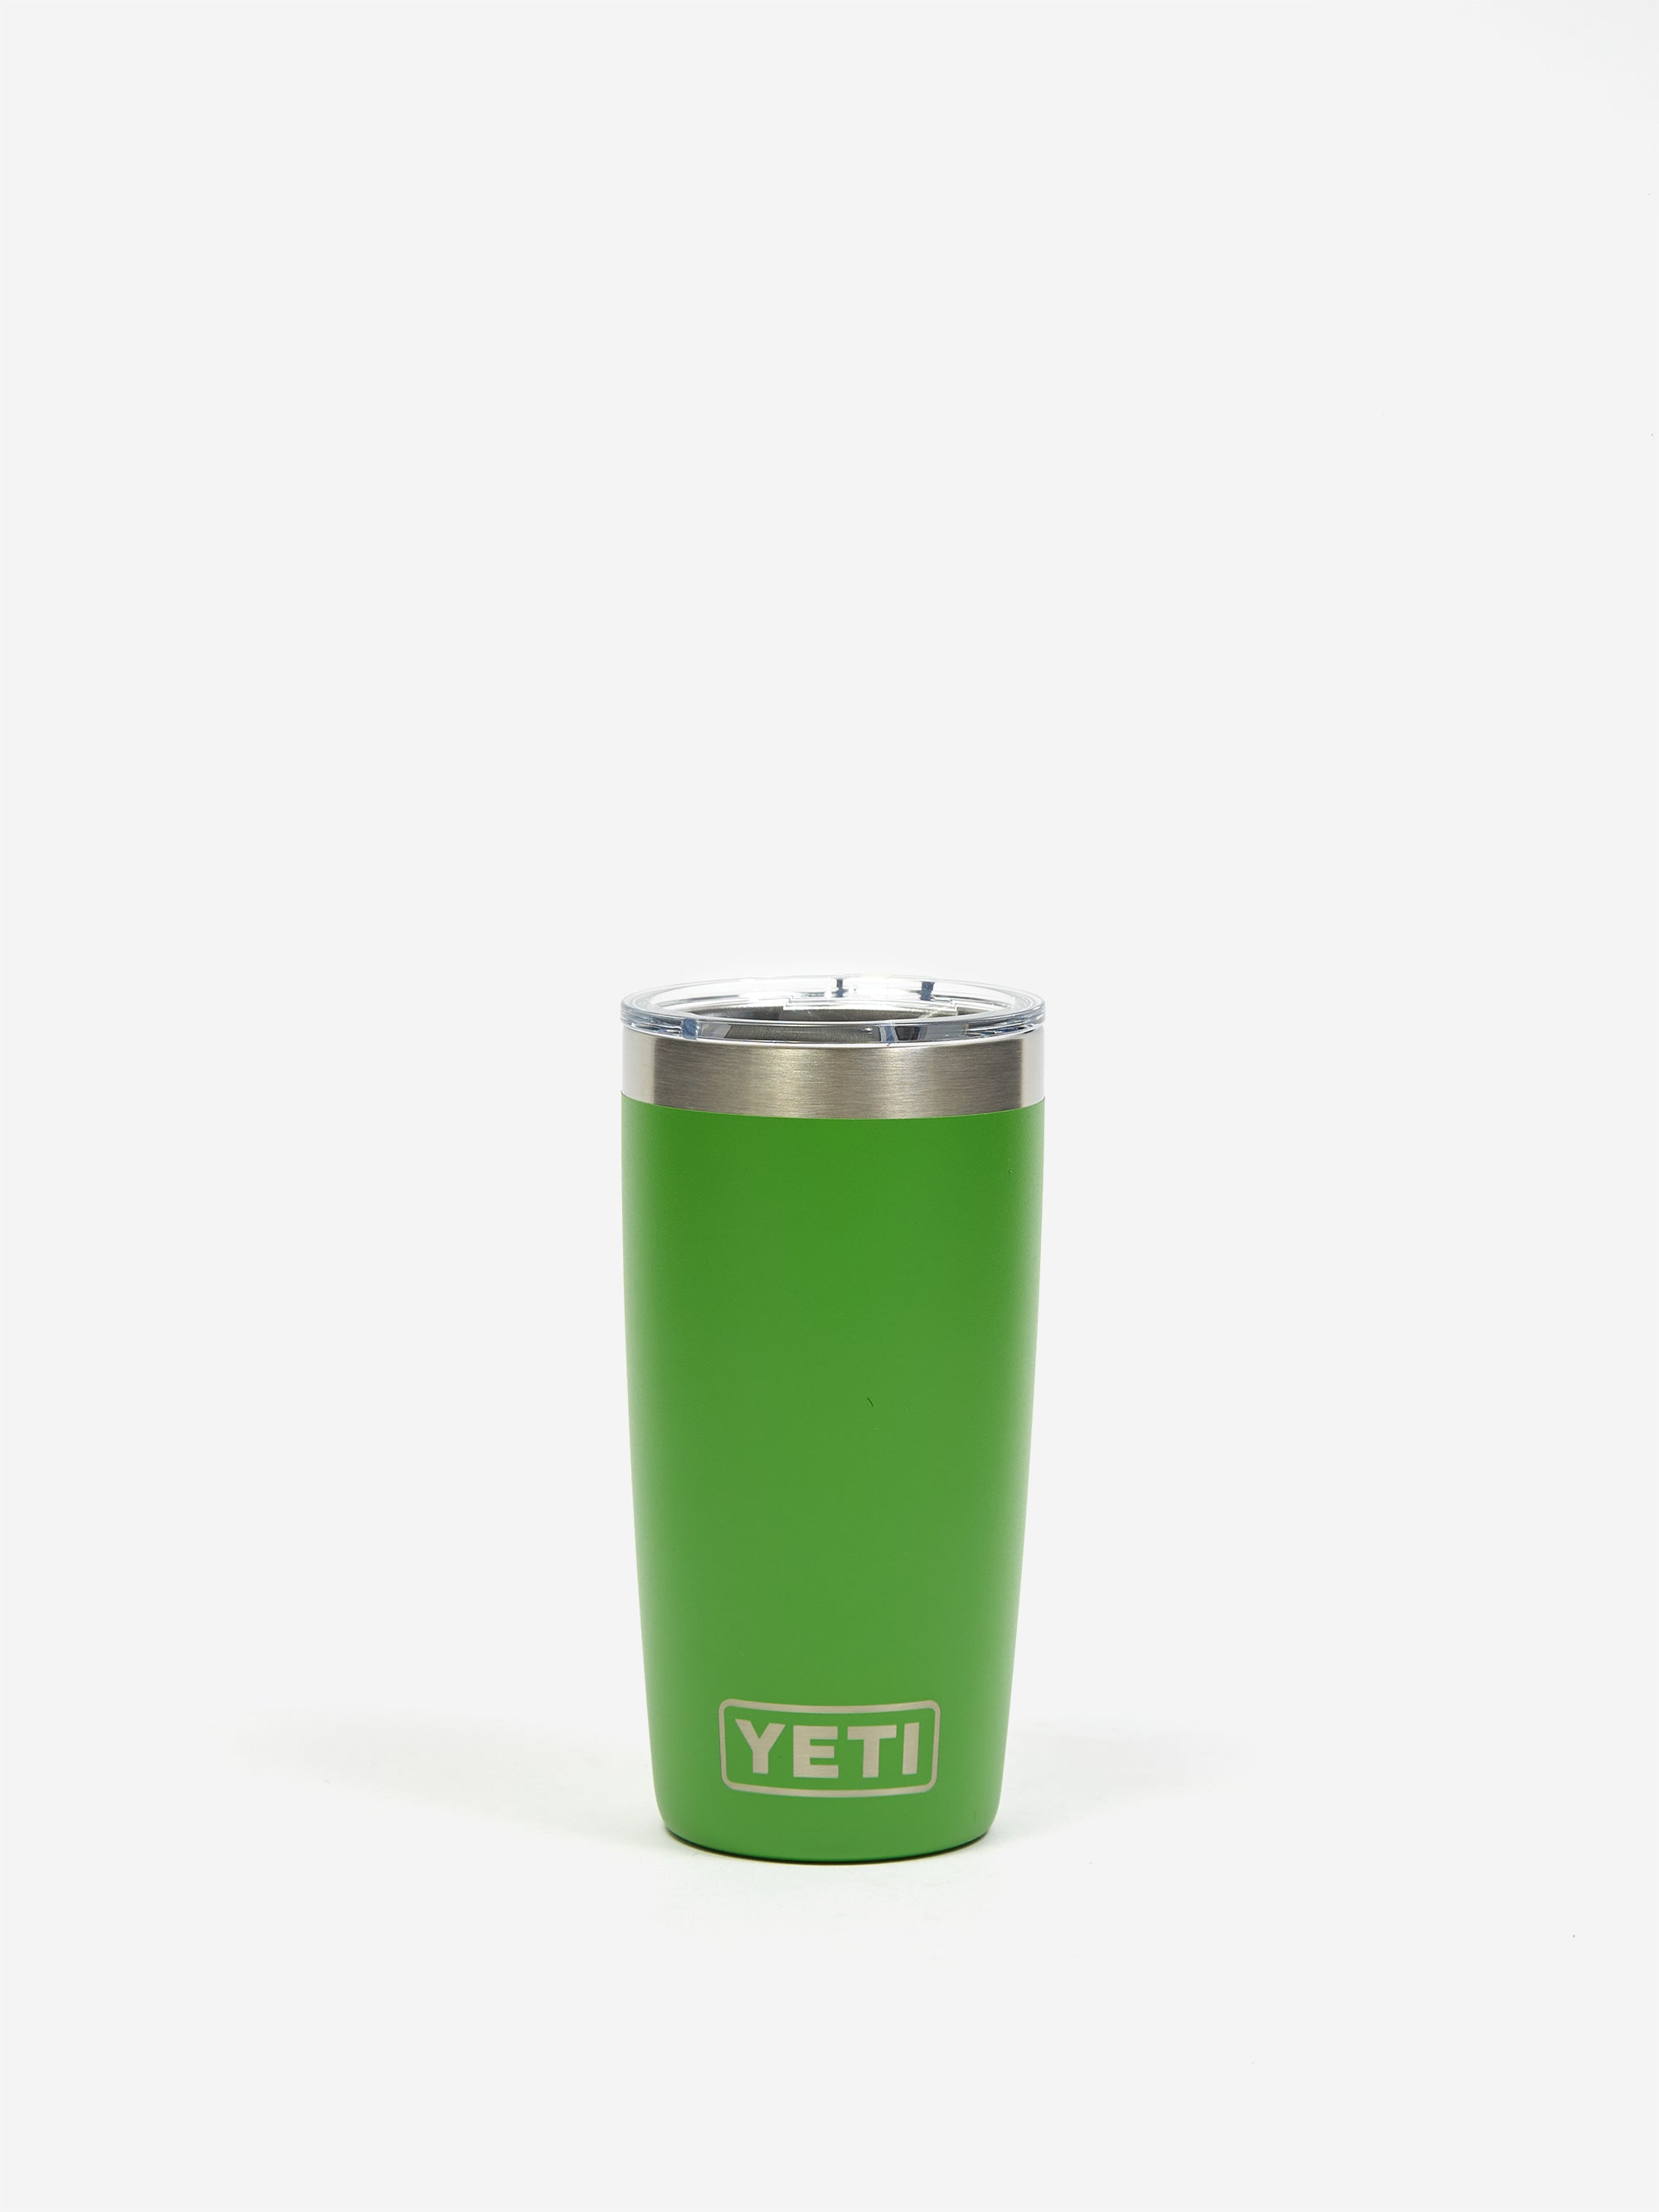 YETI - Rambler 20 oz Tumbler - Canopy Green